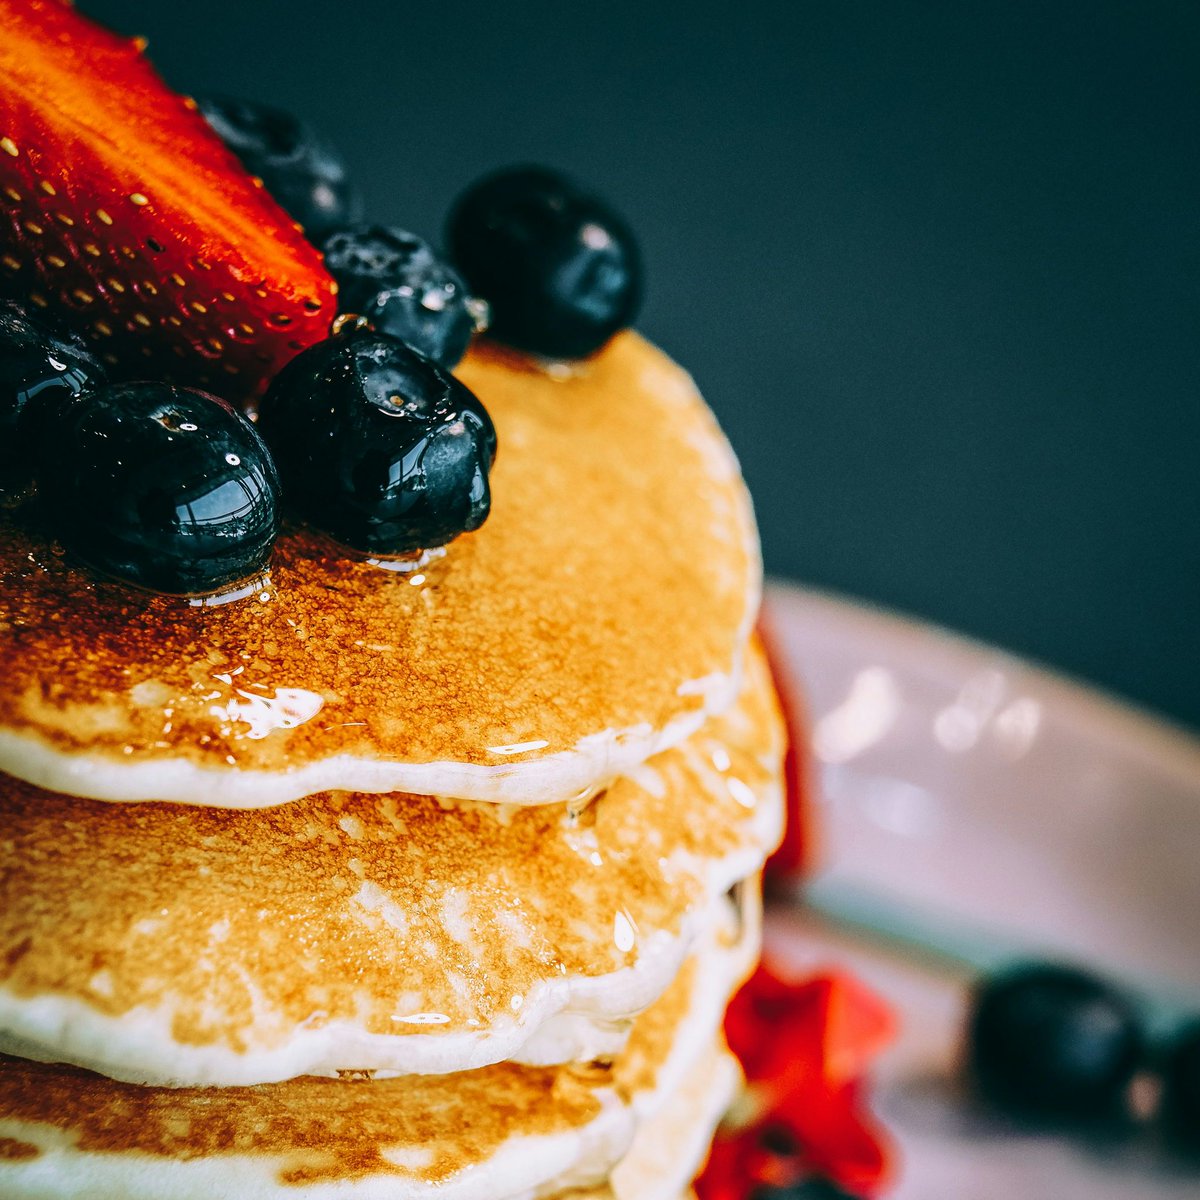 Happy Pancake Day! We hope everyone has a wonderful Shrove Tuesday and enjoys lots of pancakes today! #foodcare #crockery #pancakeday #shrovetuesday #pancakes